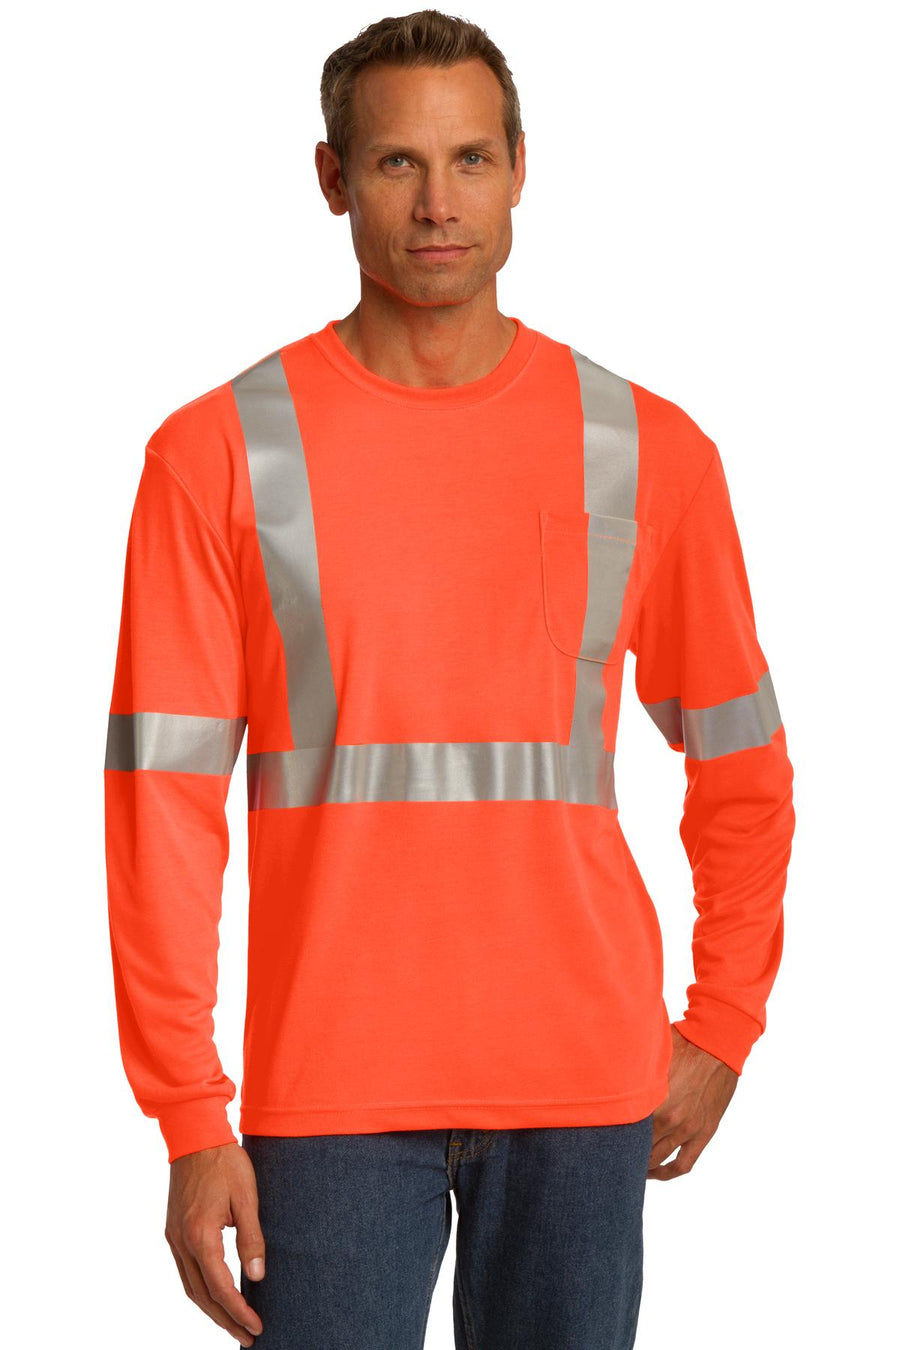 CornerStone ANSI 107 Class 2 Long Sleeve Safety T-Shirt.